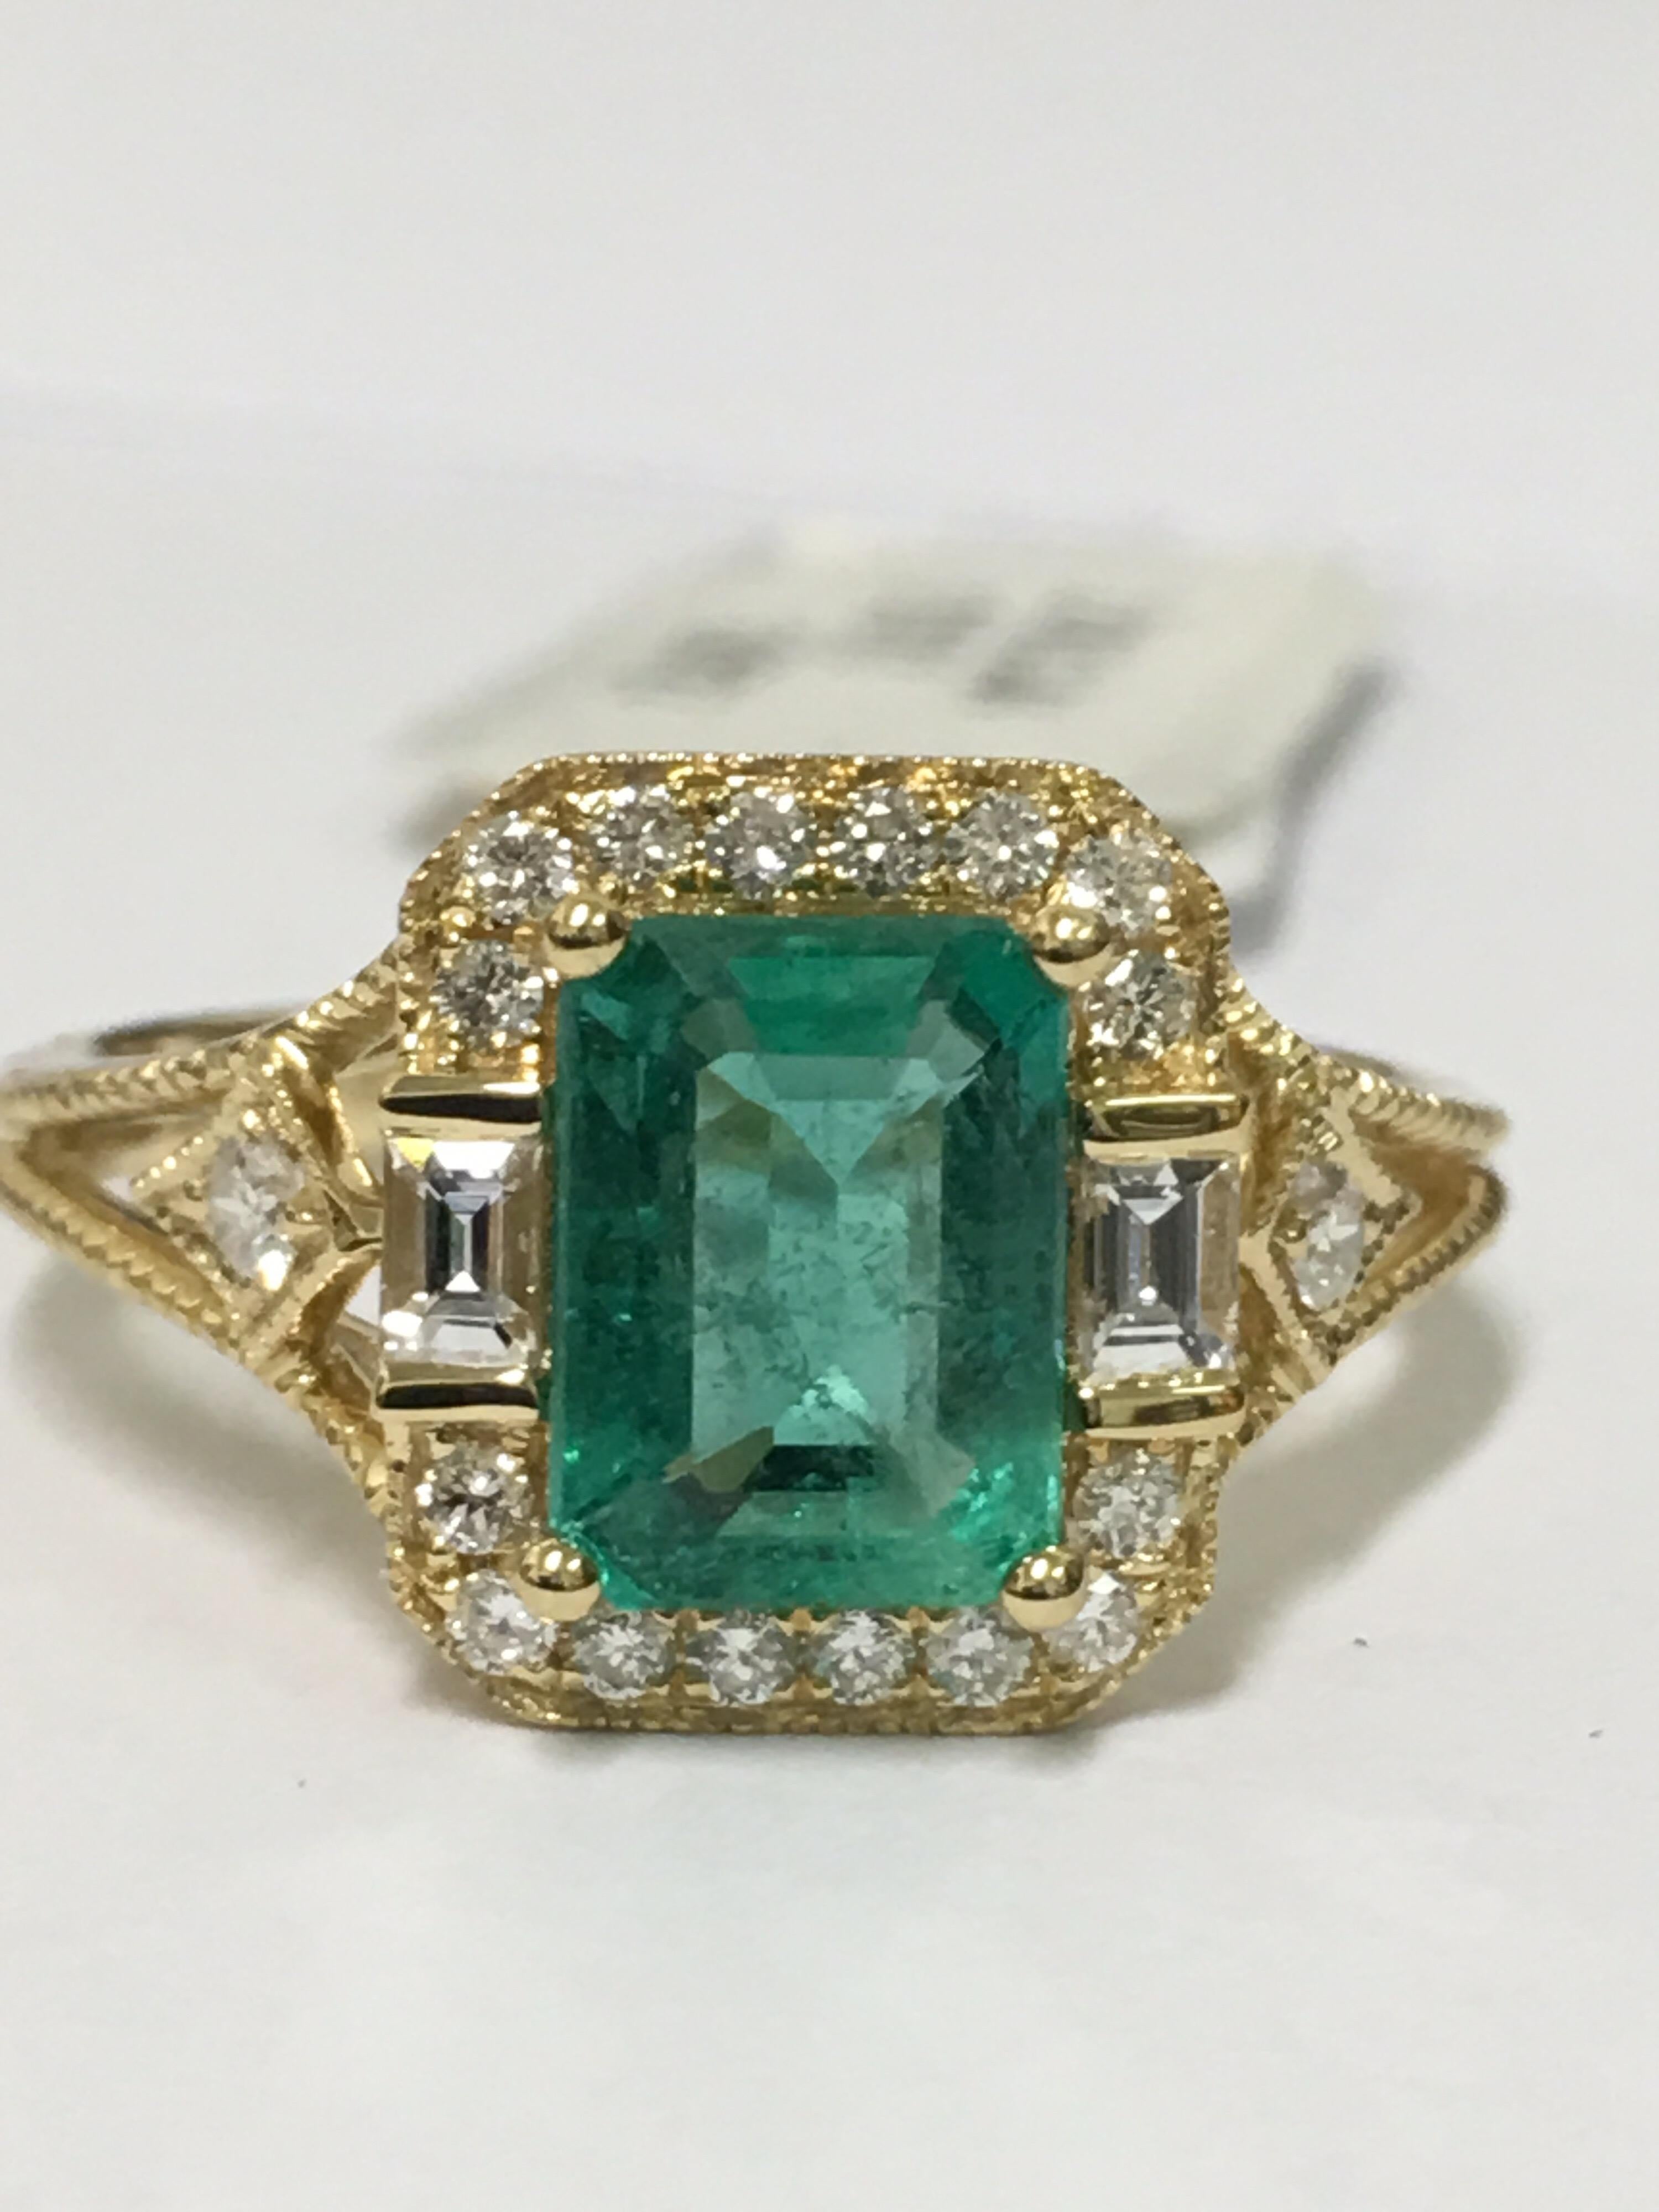 Emerald Cut Emerald Diamond Ring Set in 18 Karat Yellow Gold